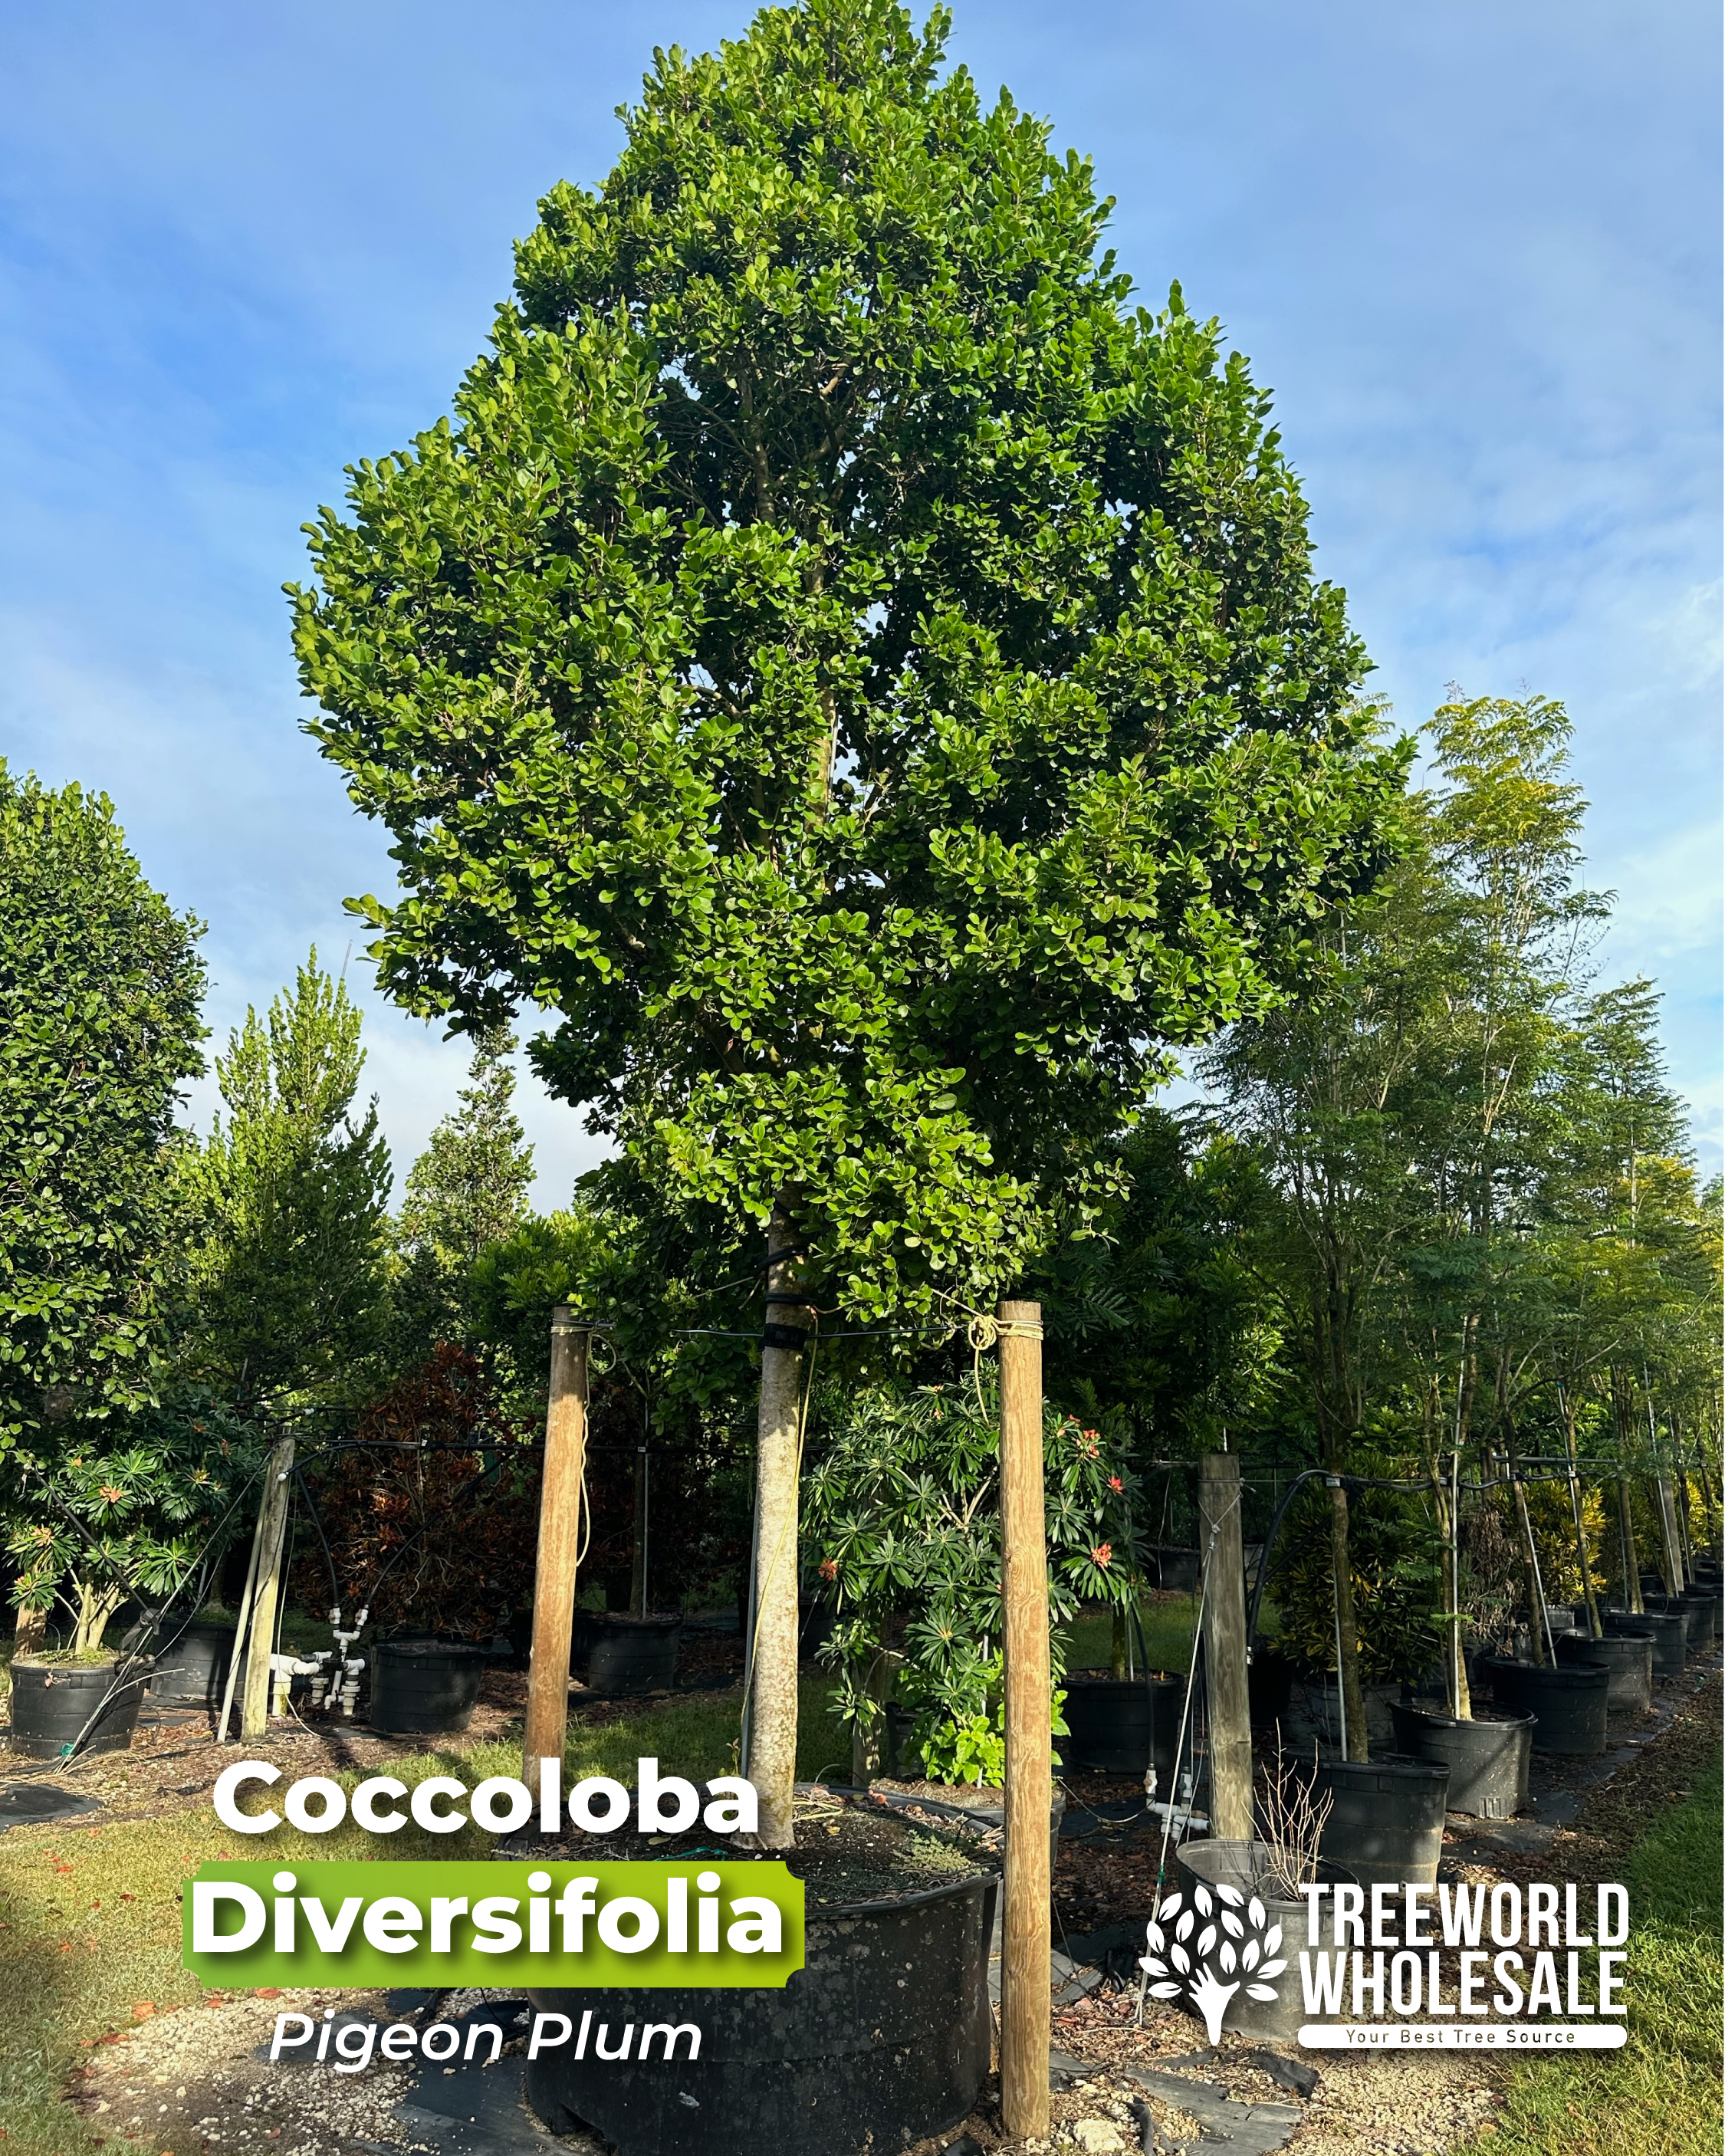 coccoloba-diversifolia-pigeon-plun-treeworld